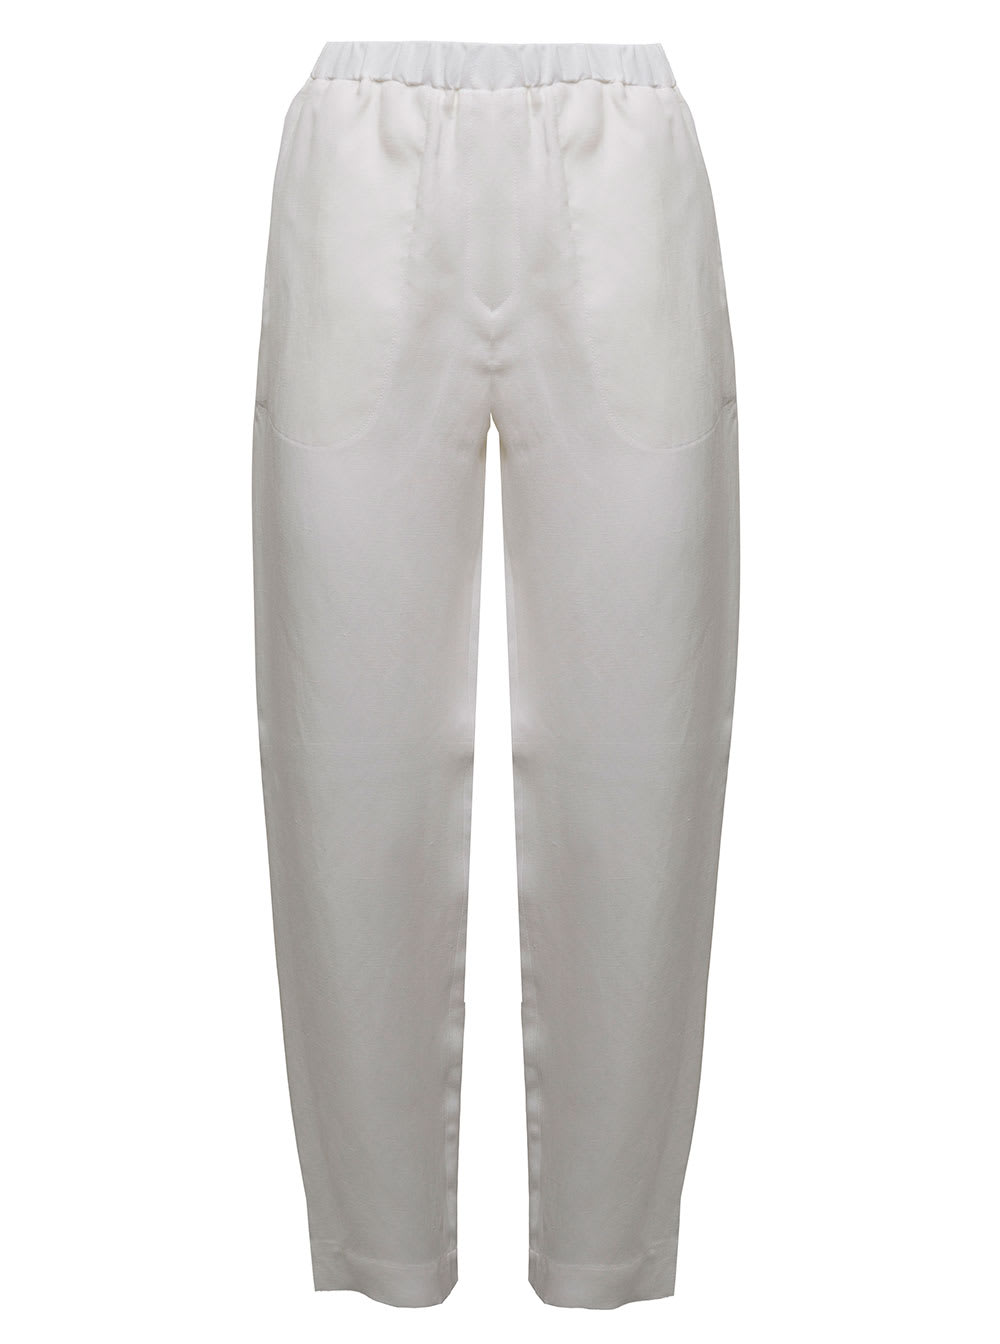 Antonelli Womans Viscose And Linen Whitetaormina Pants